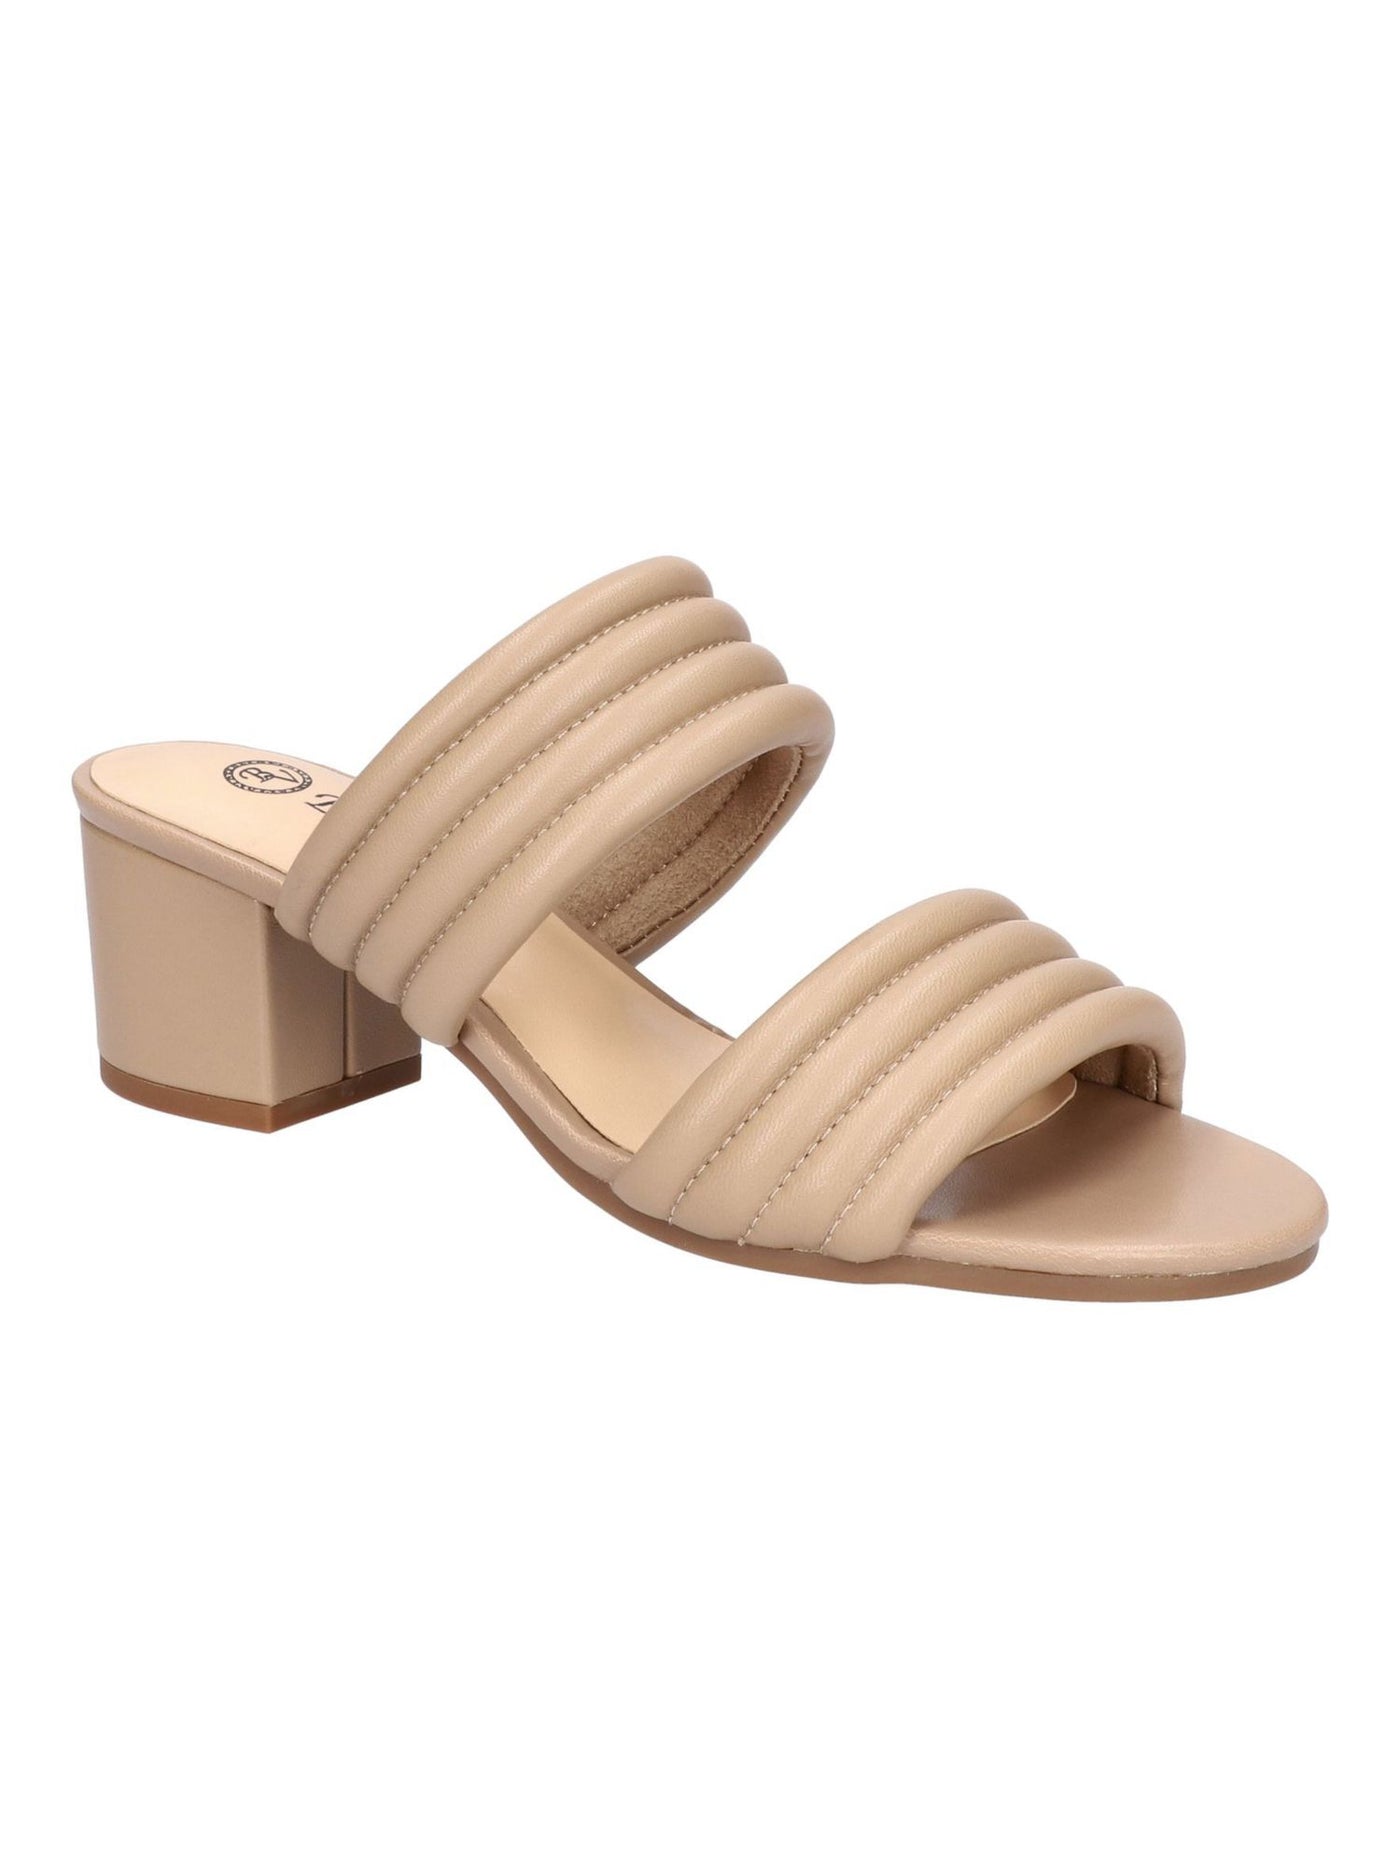 BELLA VITA Womens Gold Quilted Comfort Georgette Round Toe Block Heel Slip On Leather Heeled Sandal 10 WW